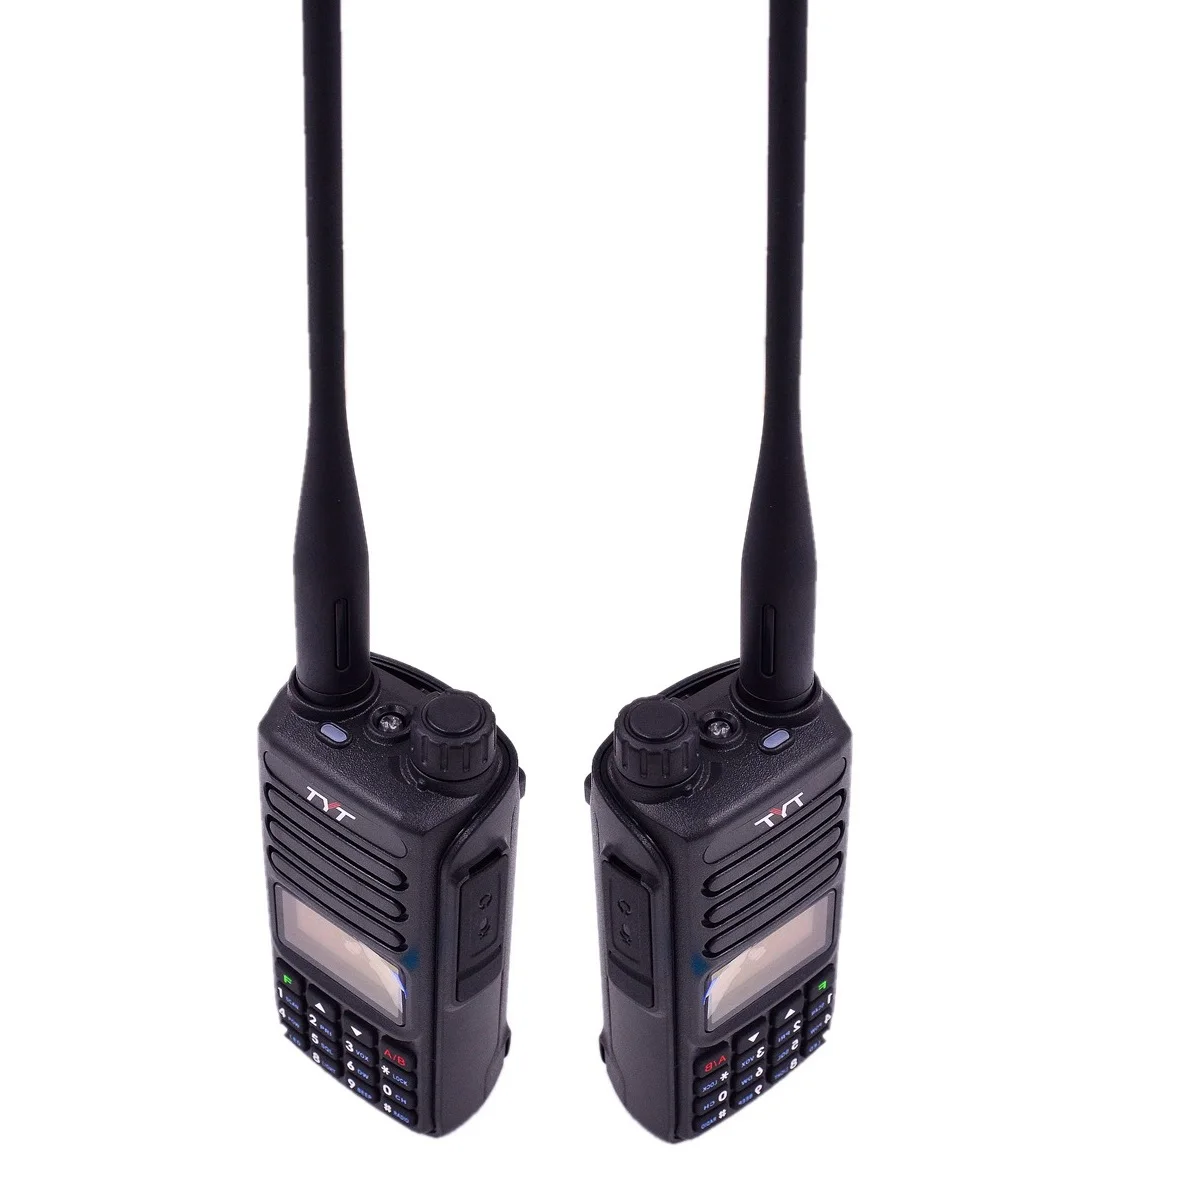 2 Pack TYT UV98 Two Way Radio 10W Power 3200mAh Dual Band UHF VHF DOT MATRIX Screen HD Audio Scrambler DTMF Wireless Transceiver